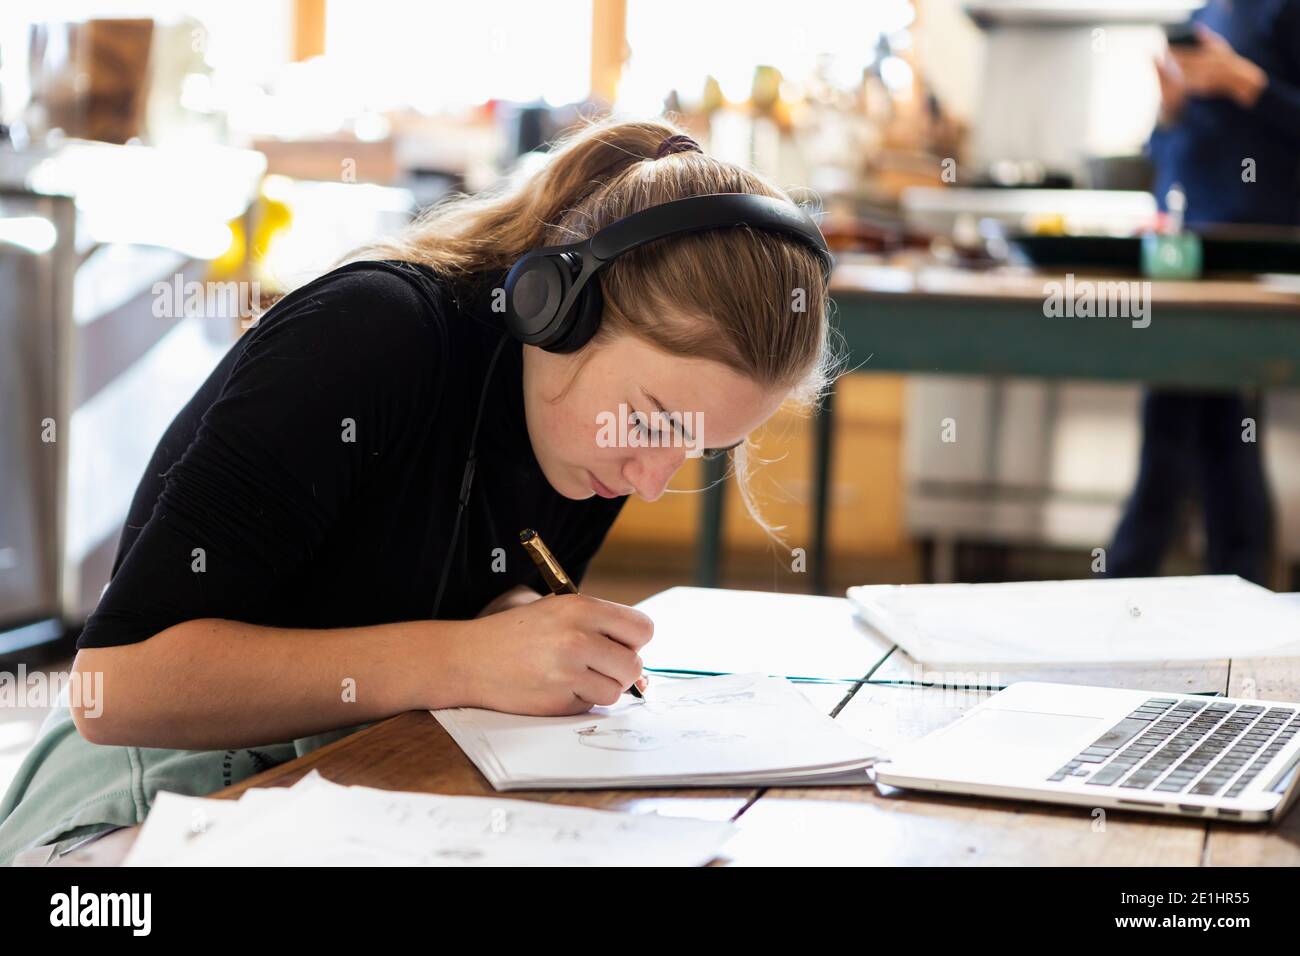 teenage girl wearing headphones, drawing on paper Stock Photo